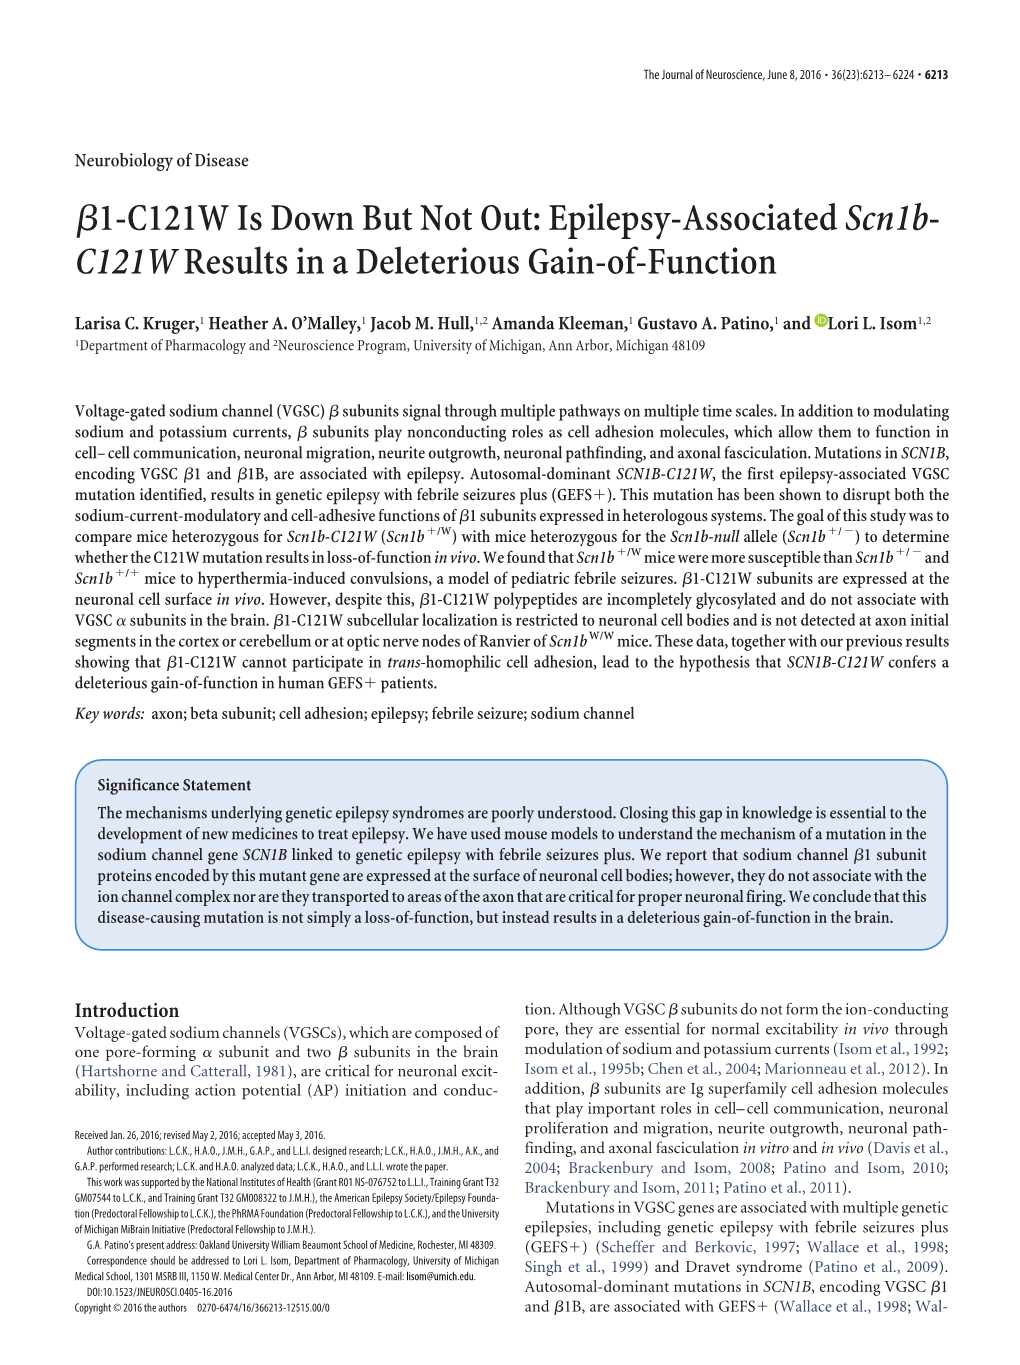 Epilepsy-Associated Scn1b-C121W Results